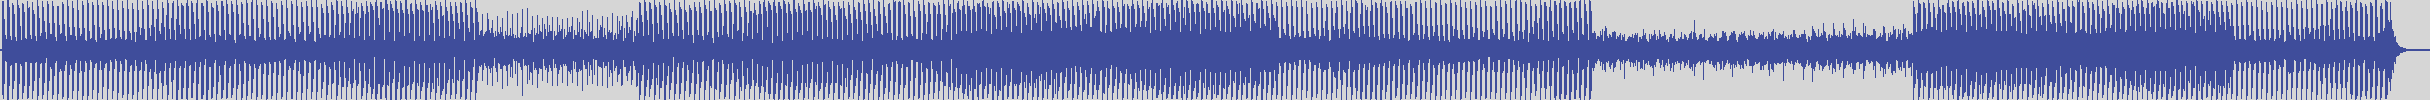 nf_boyz_records [NFY021] Olindo Blind - Prisoner [Micro Tech Edit] audio wave form